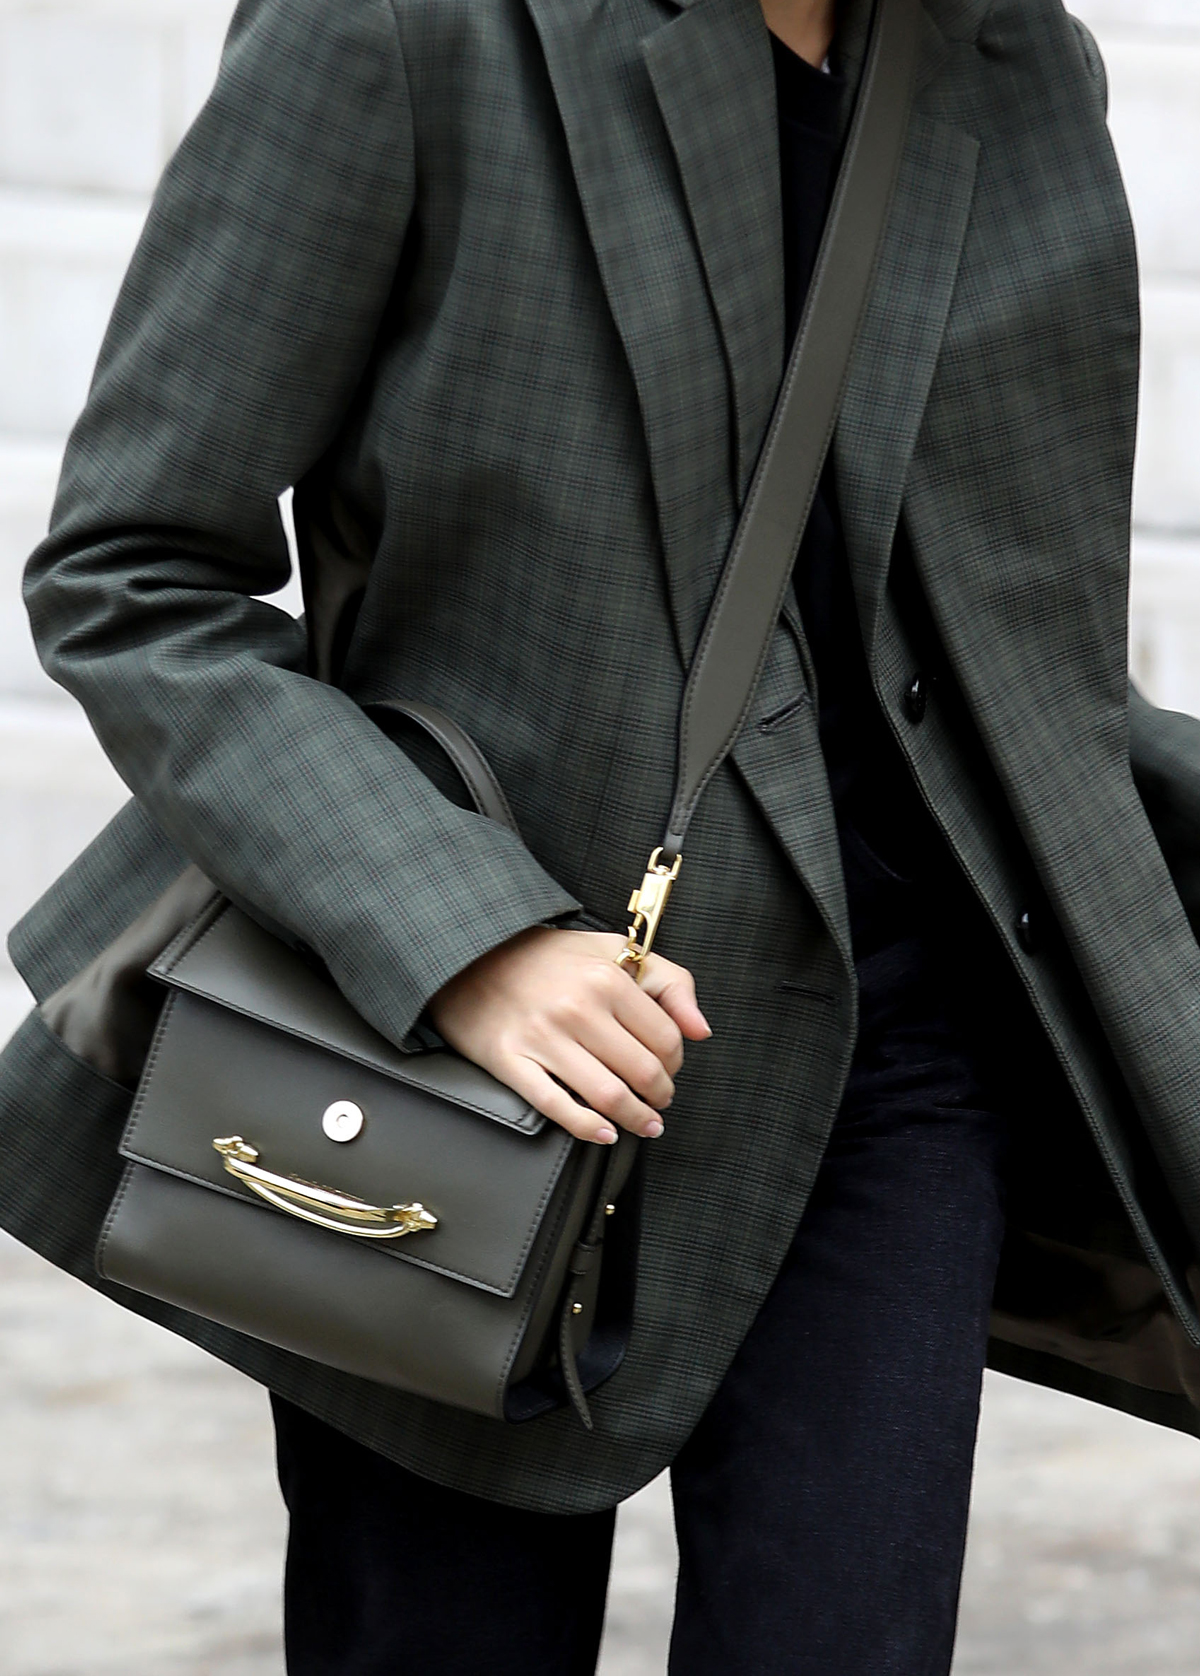 Best designer handbags 2020: Alexander McQueen story bag as seen on model wearing a green checked jacket